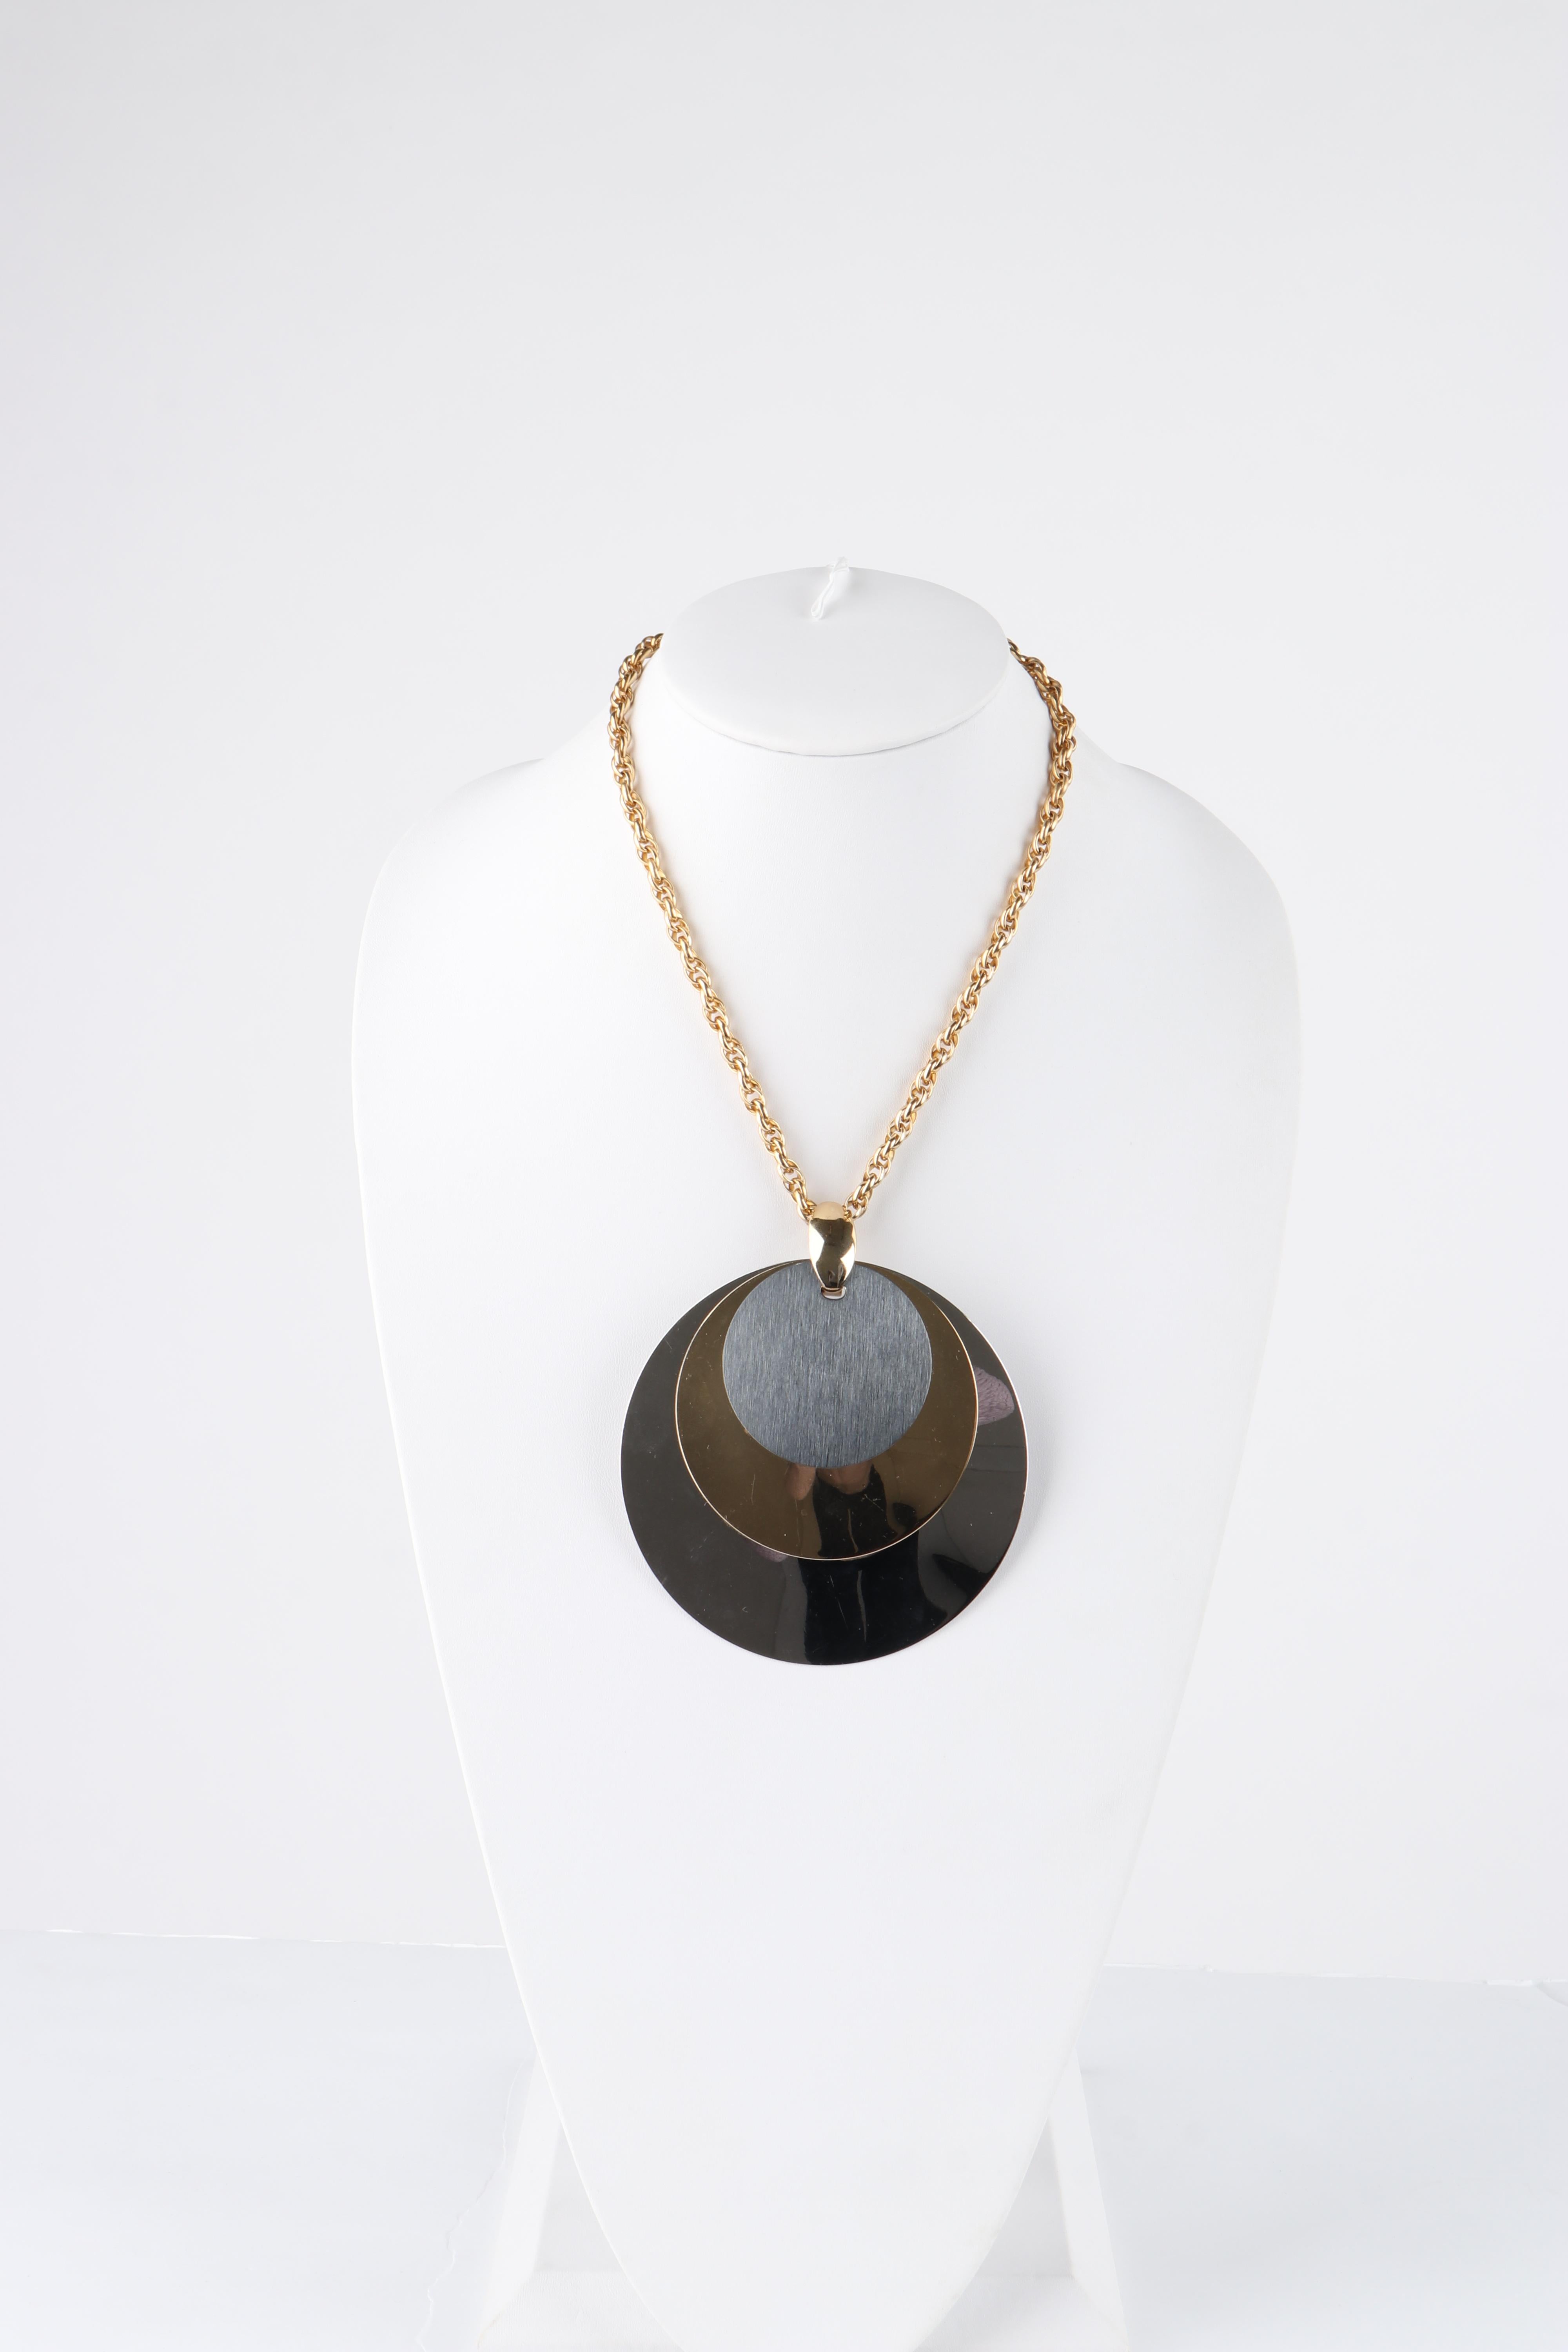 NAPIER c.1974 Vtg Modernist Tri-Metal Oval Pendant Necklace Bracelet 4 Pc Set For Sale 1